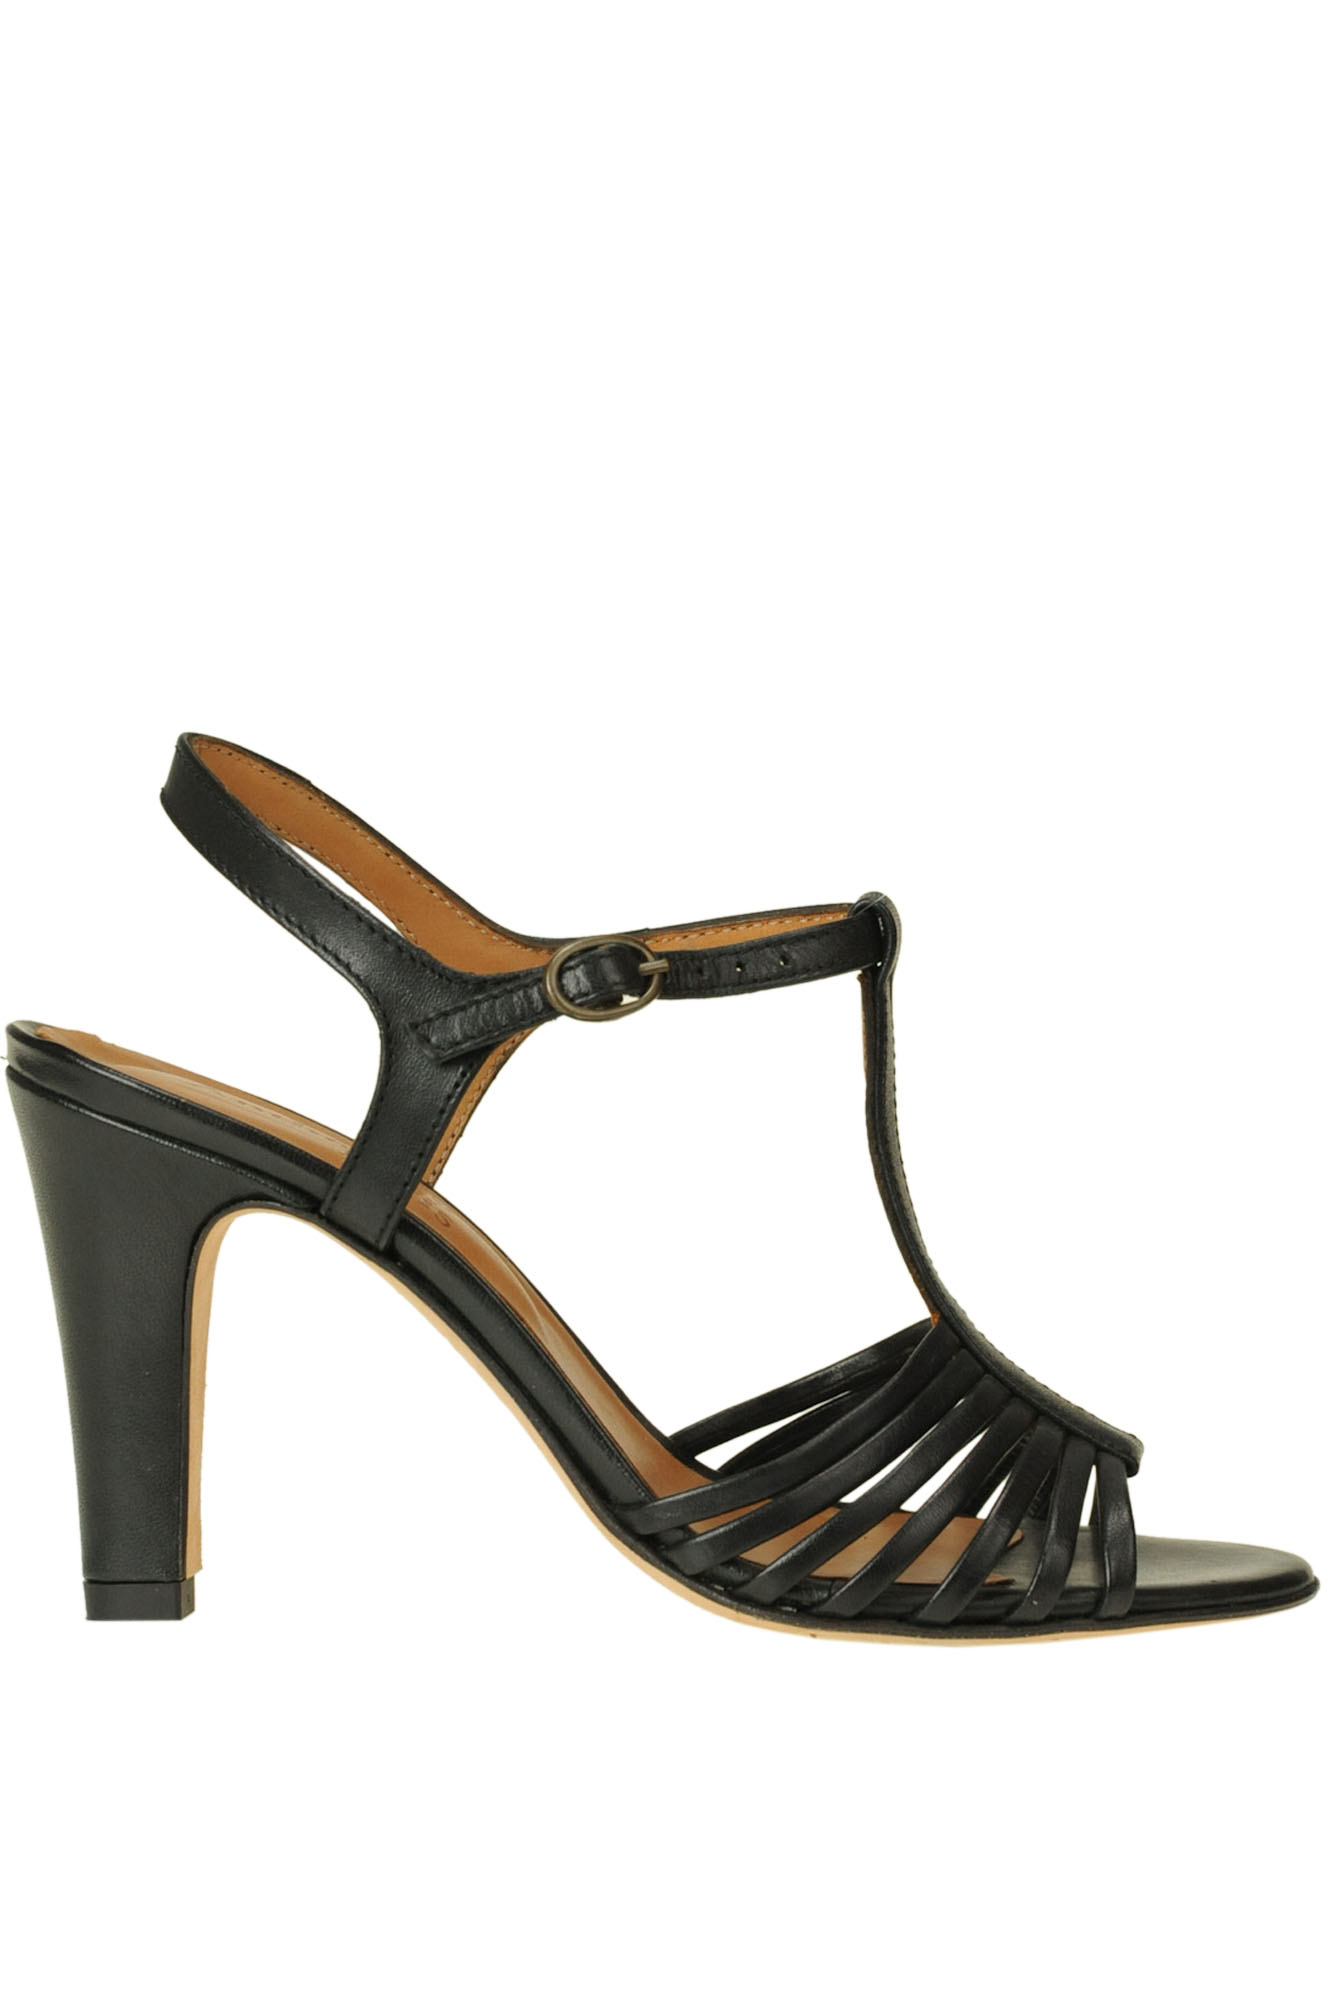 Anthology Paris T-bar leather sandals - Buy online on Glamest Fashion ...